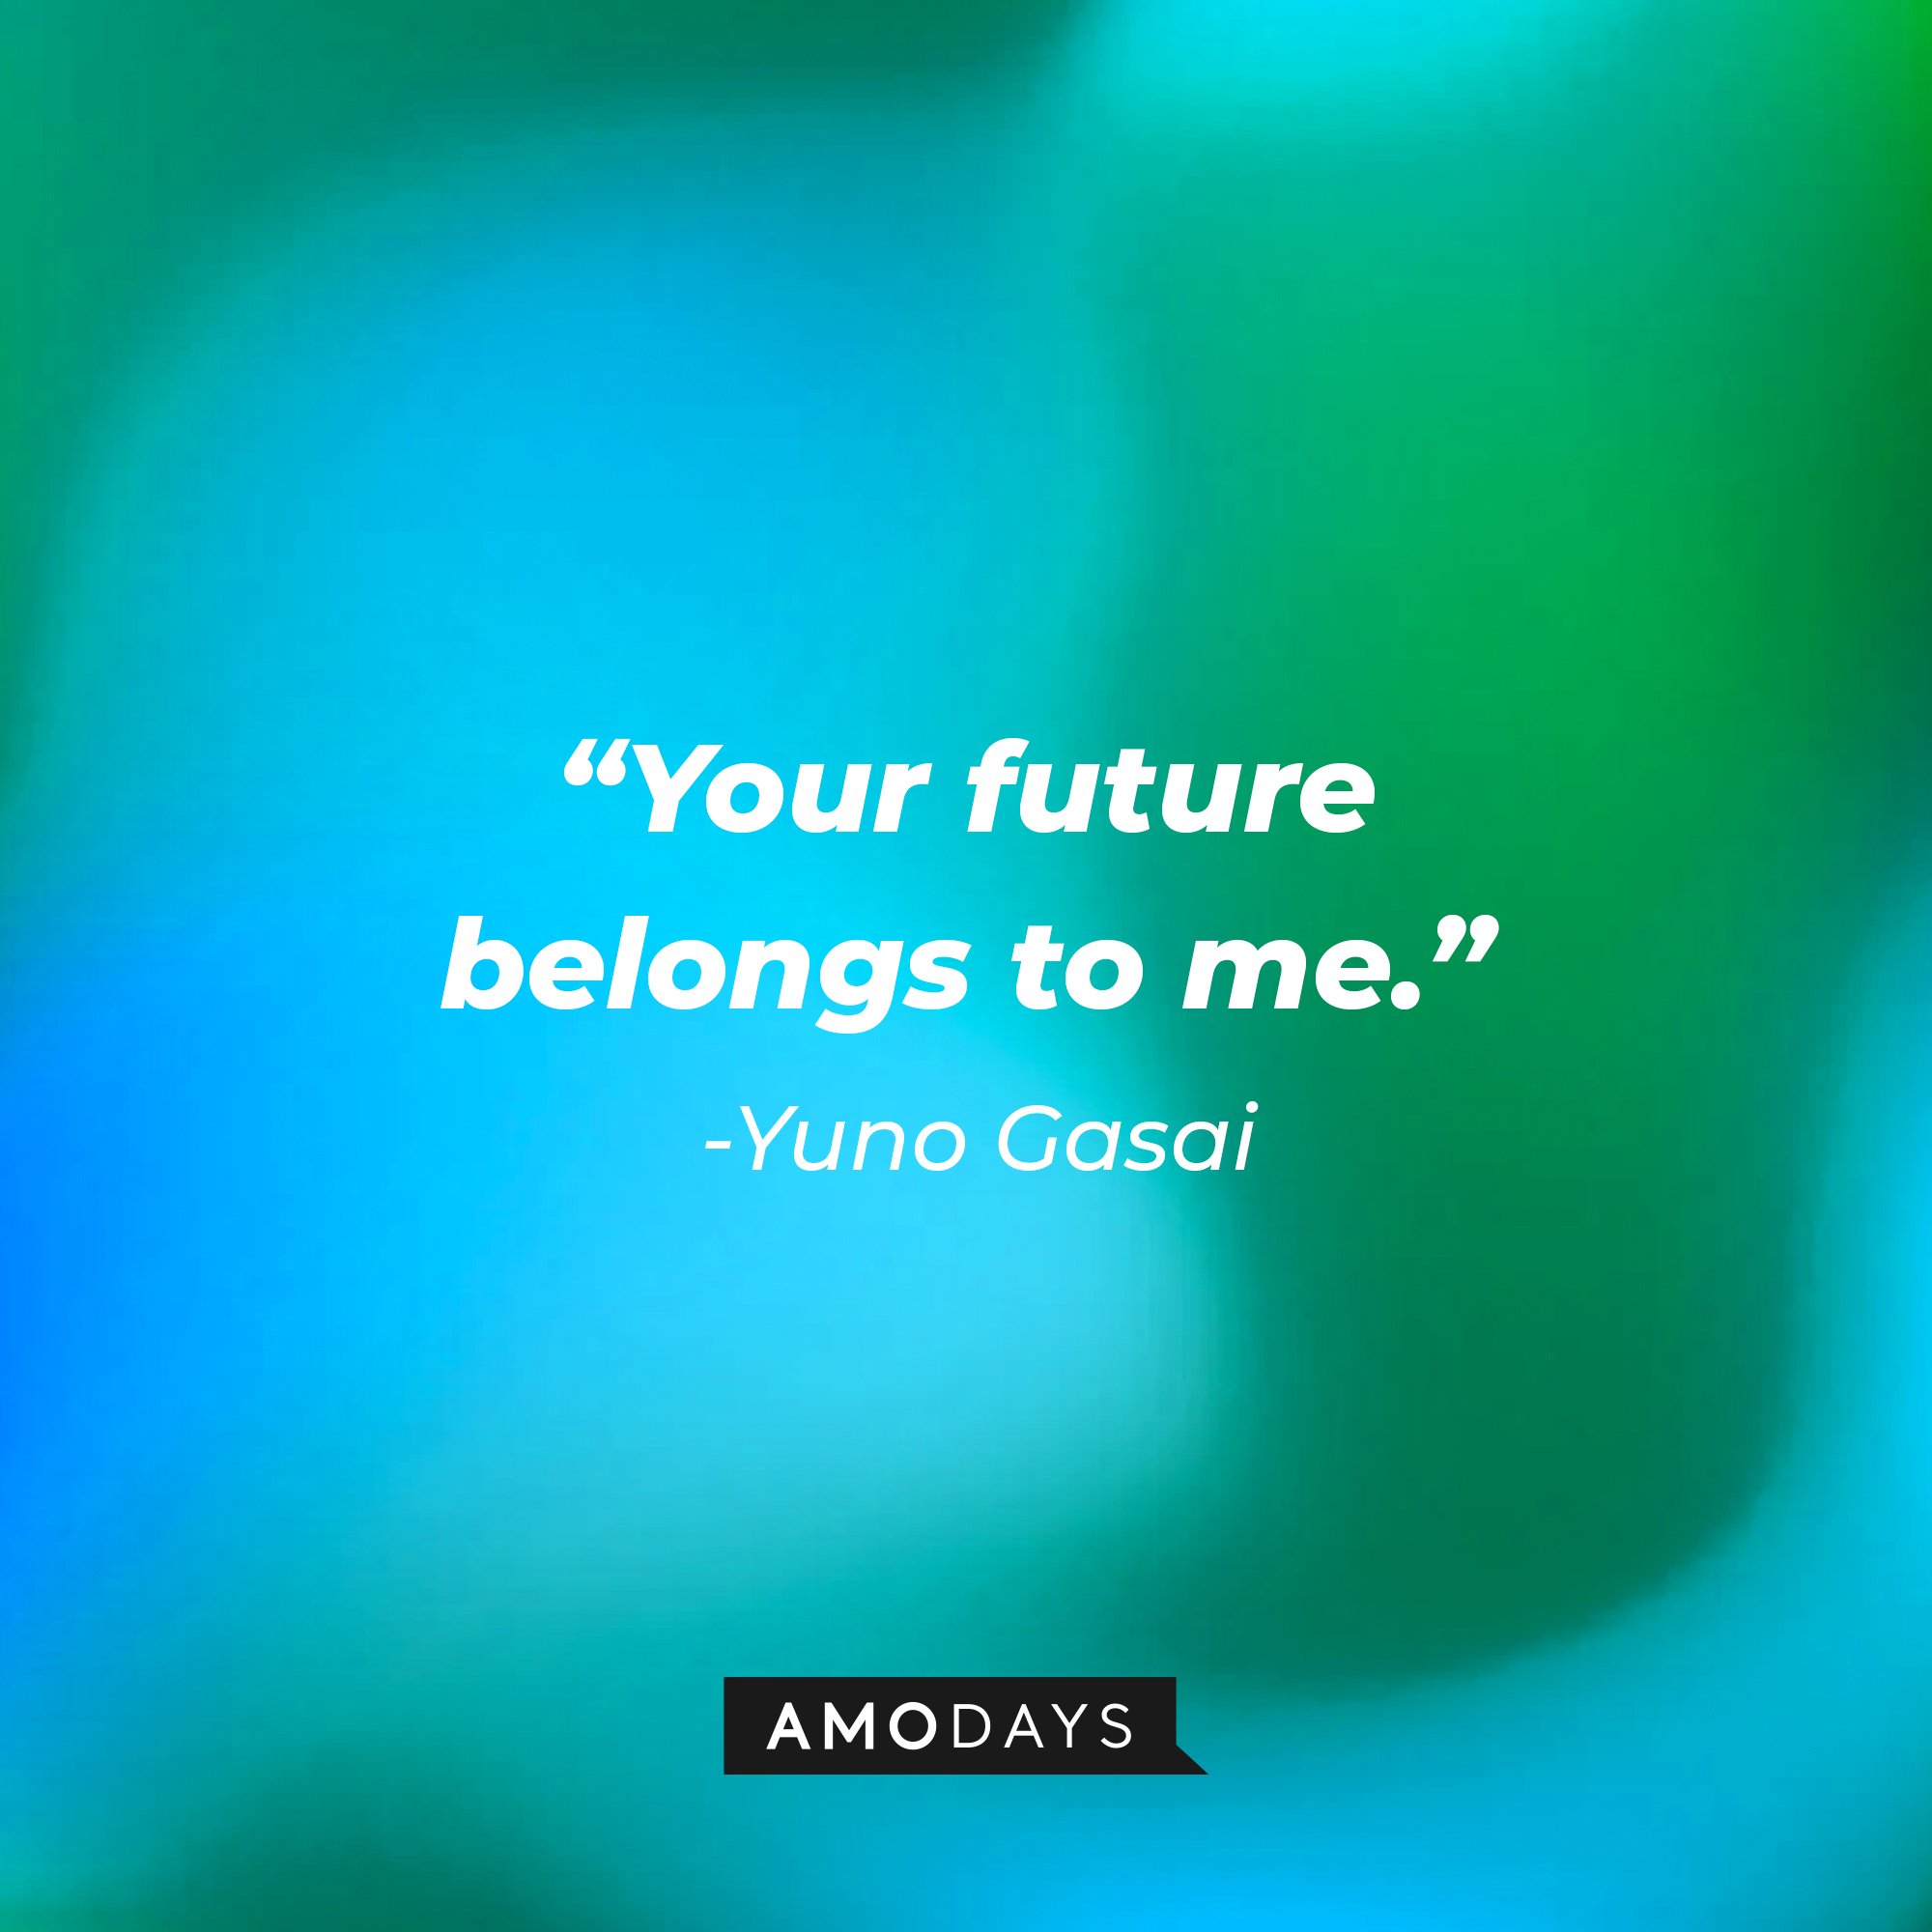 Yuno Gasai’s quote: “Your future belongs to me.” | Image: AmoDays  